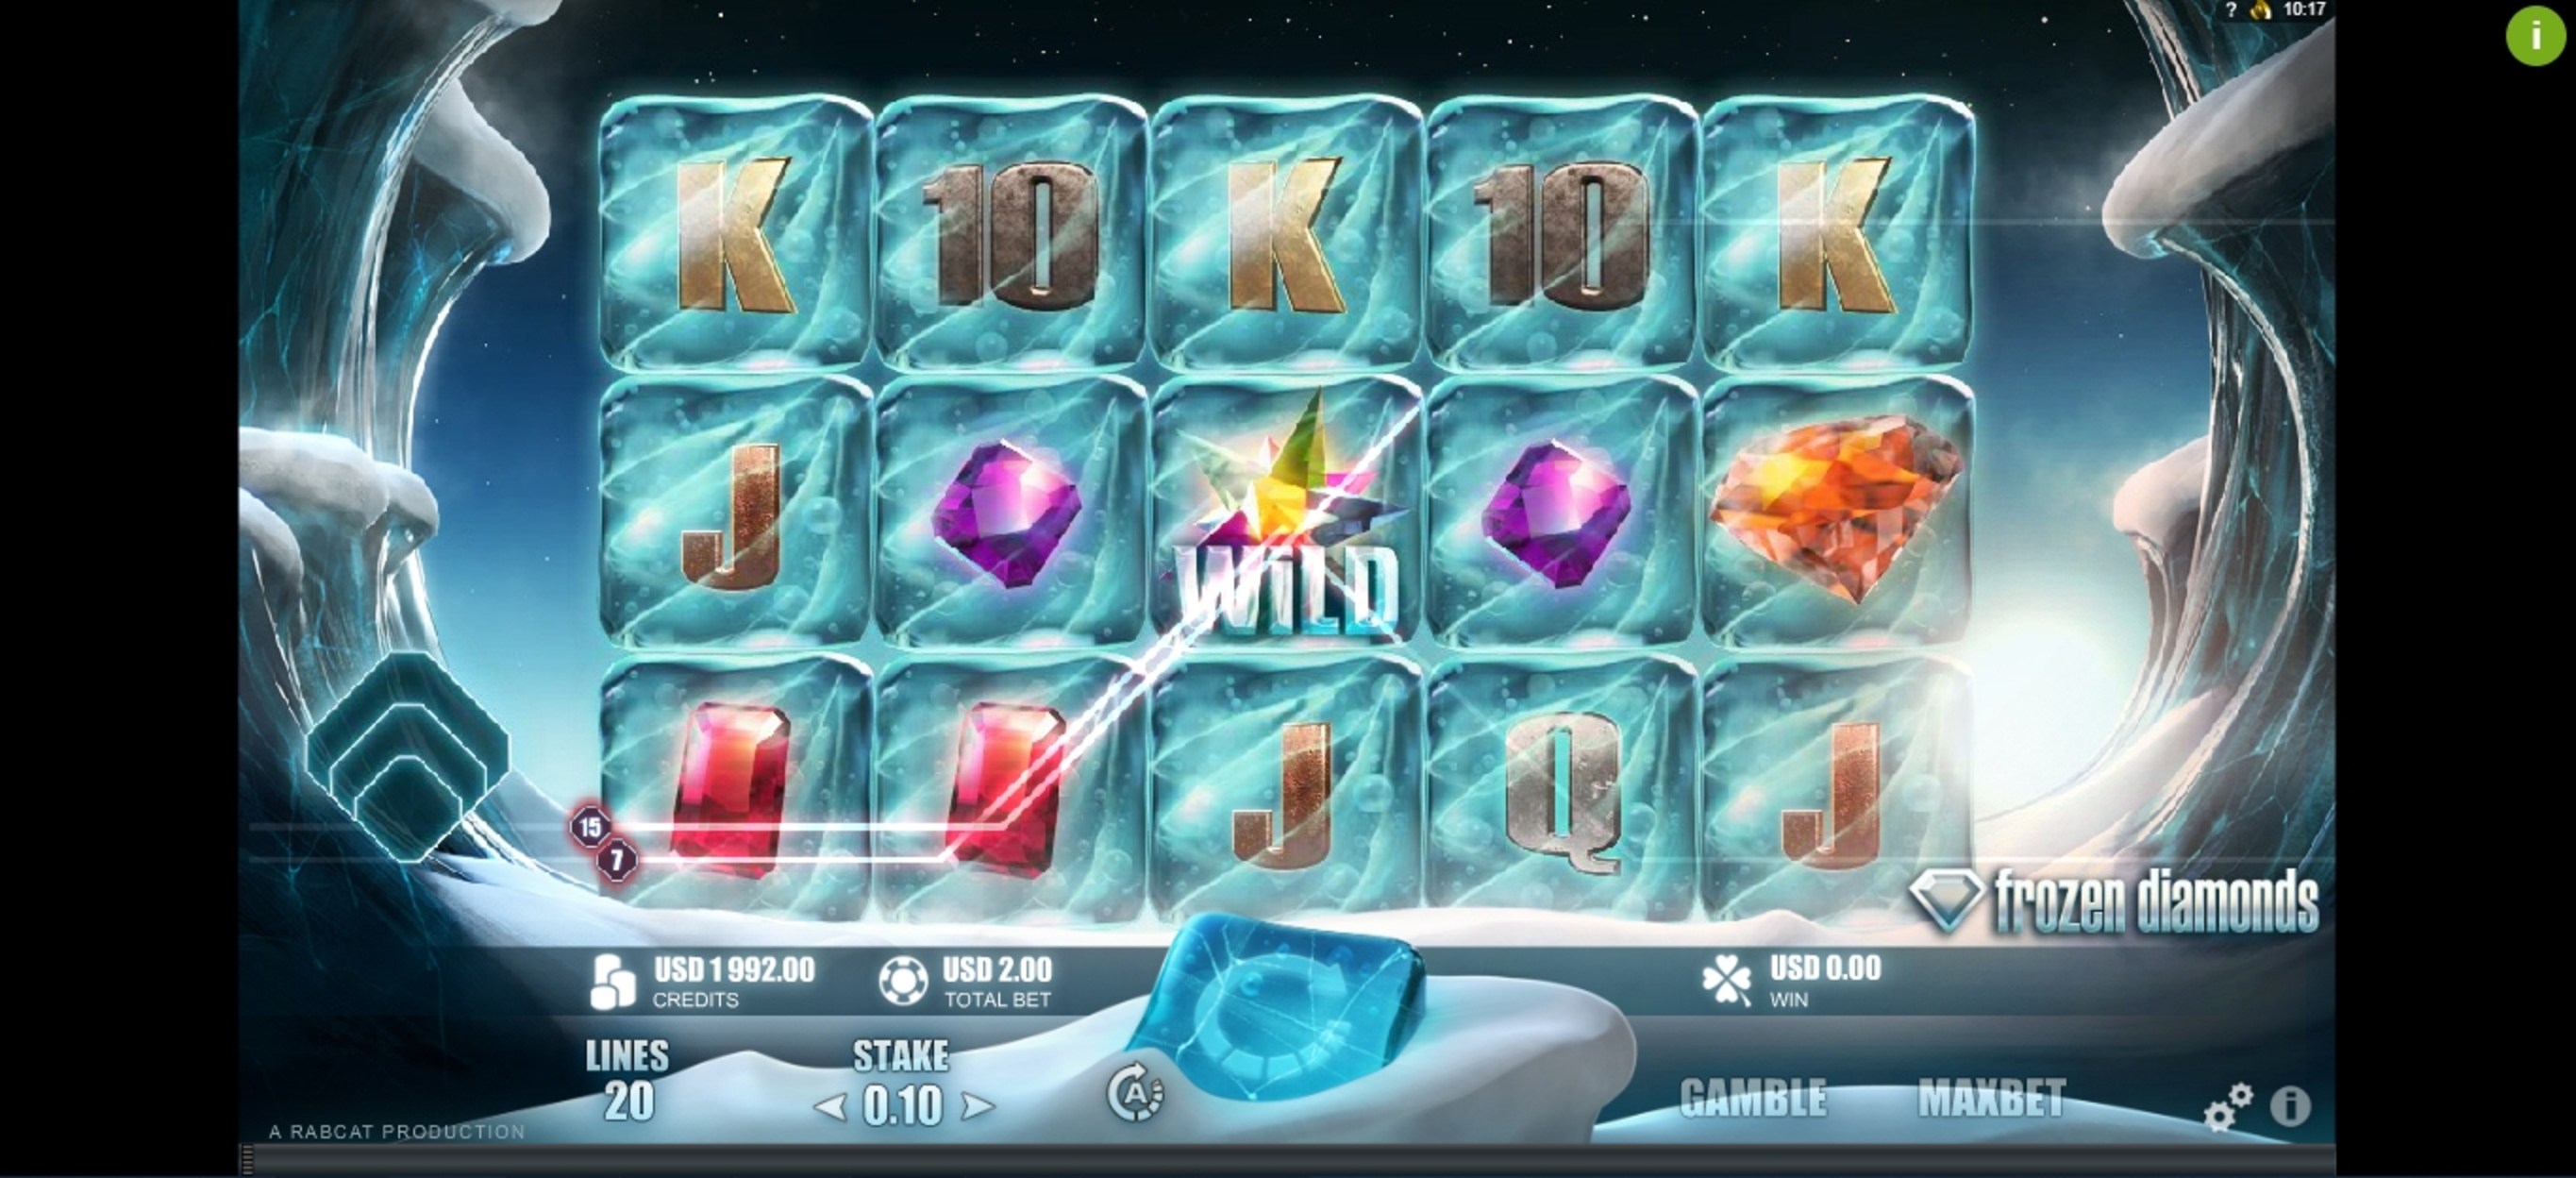 Win Money in Frozen Diamonds Free Slot Game by Rabcat